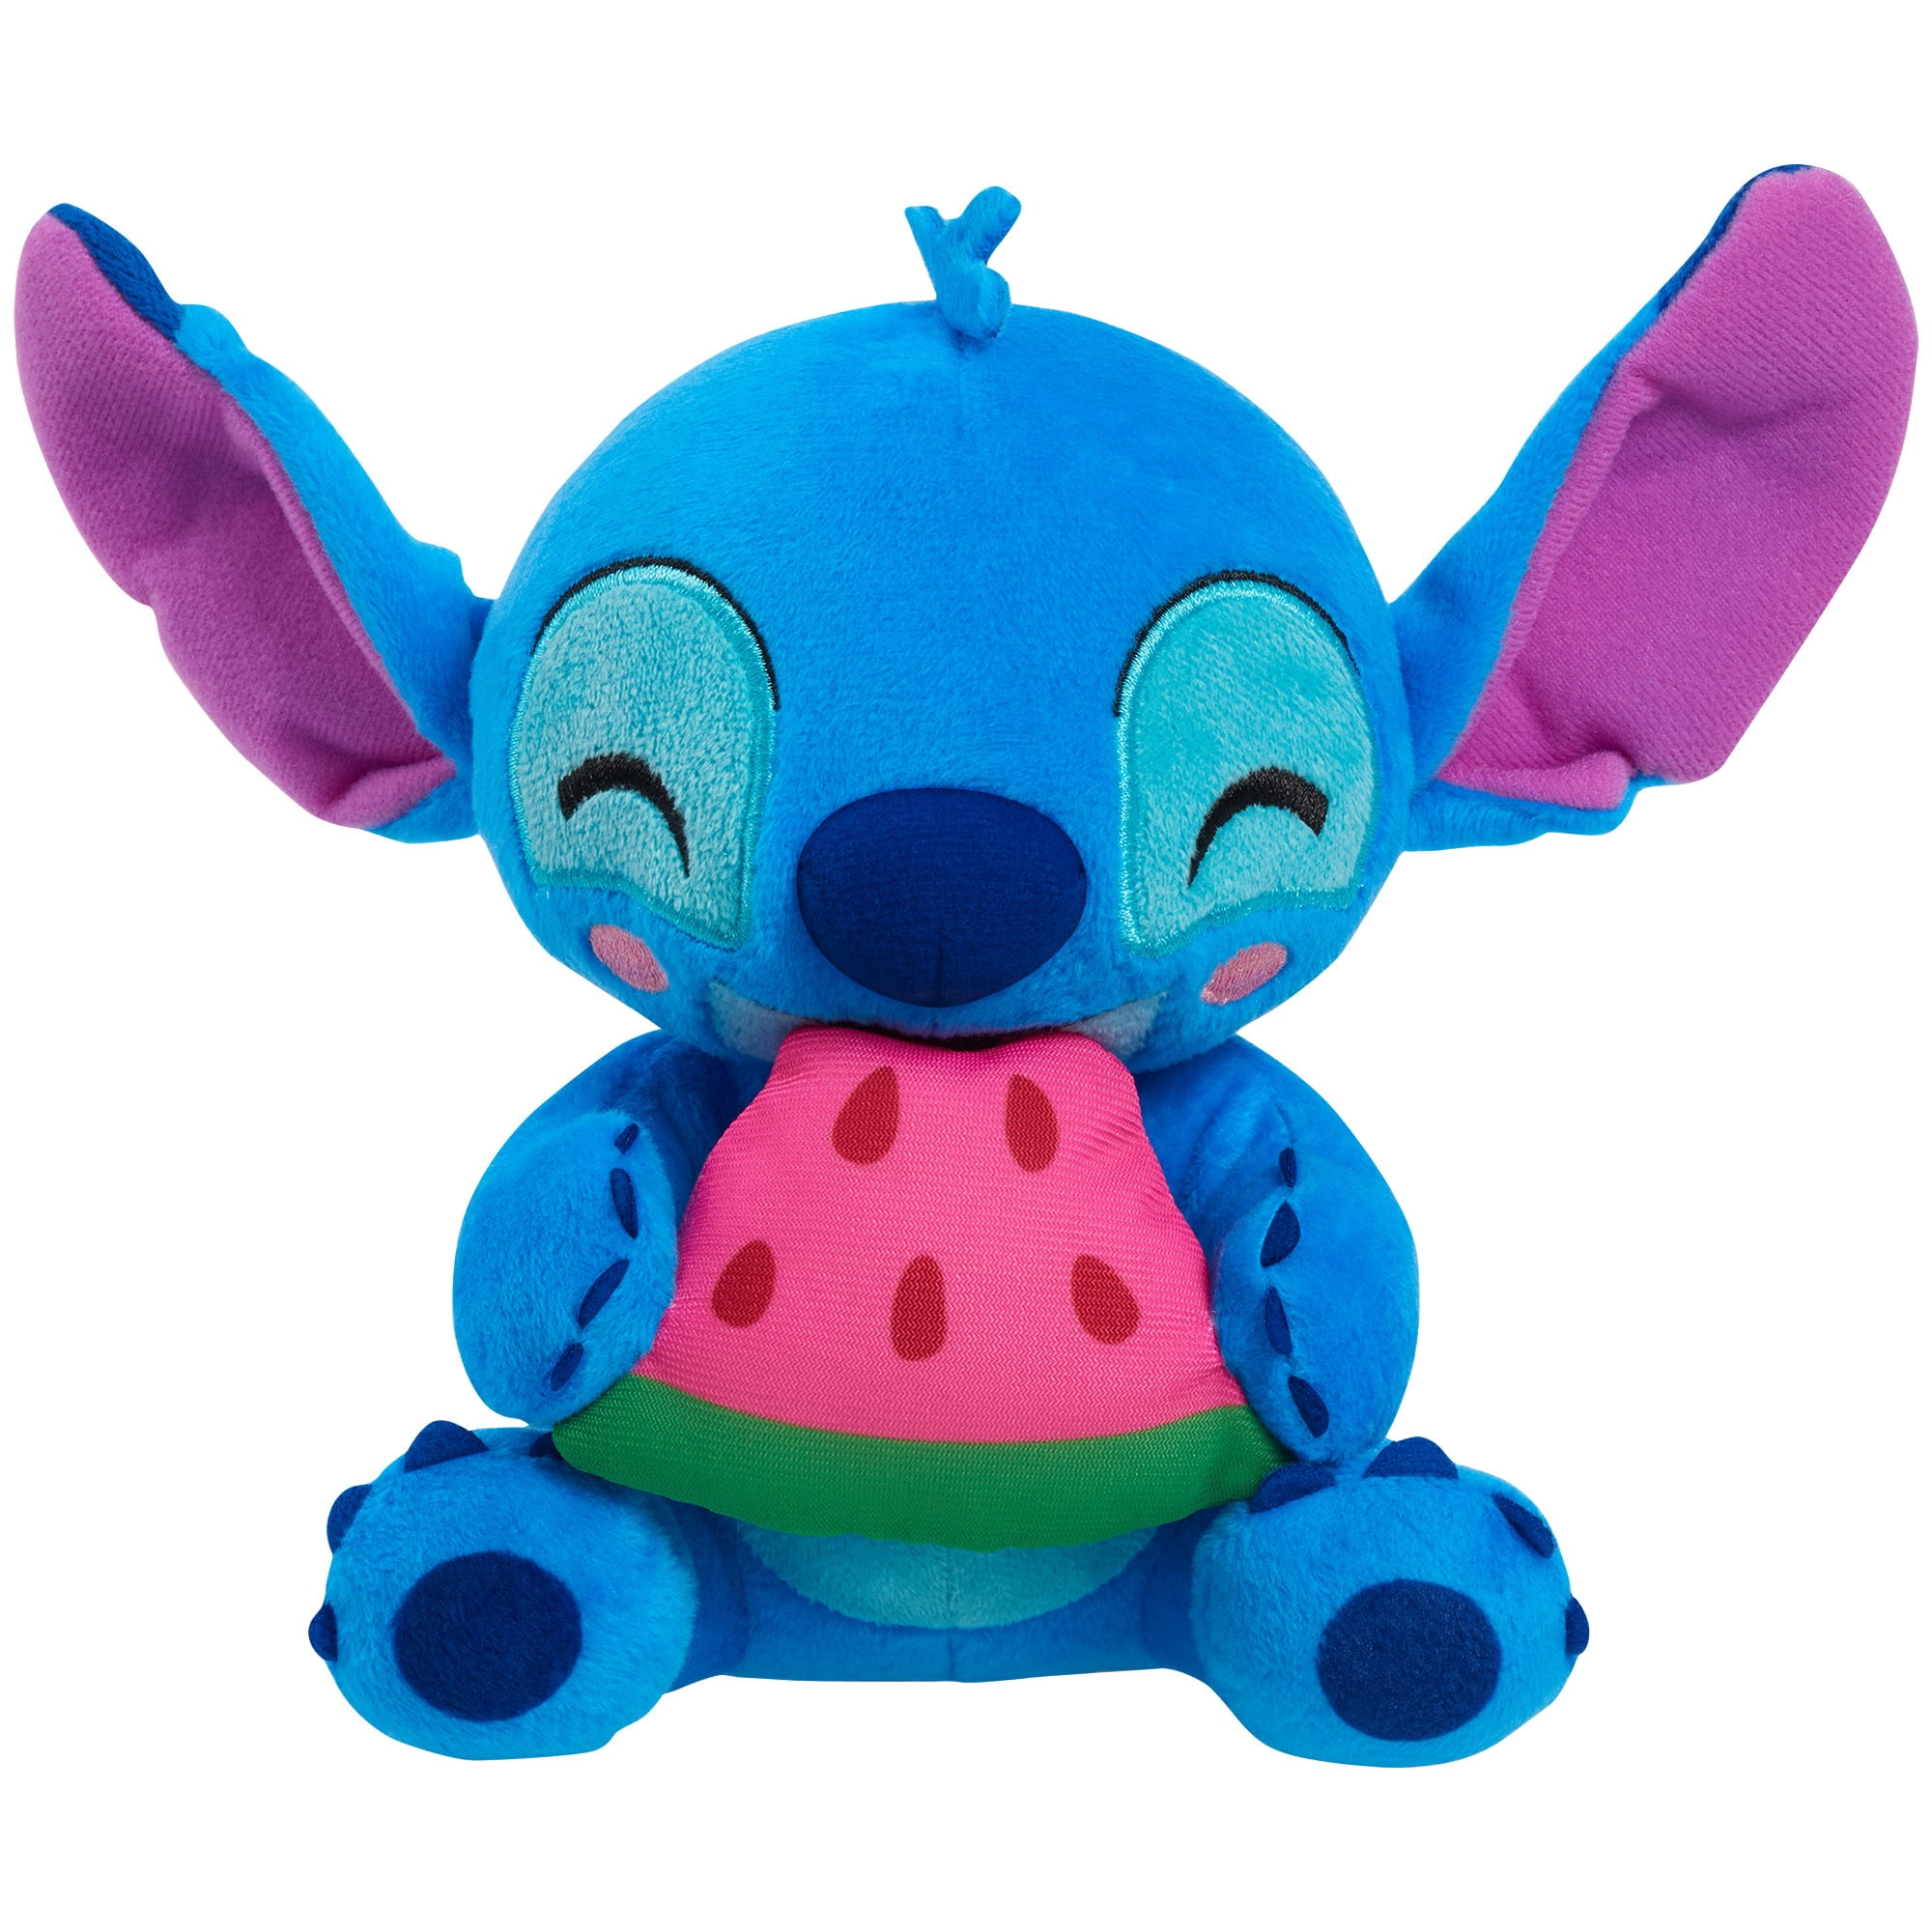 Disney Kids' Stitch Small Plush Toy with Watermelon - 7 in